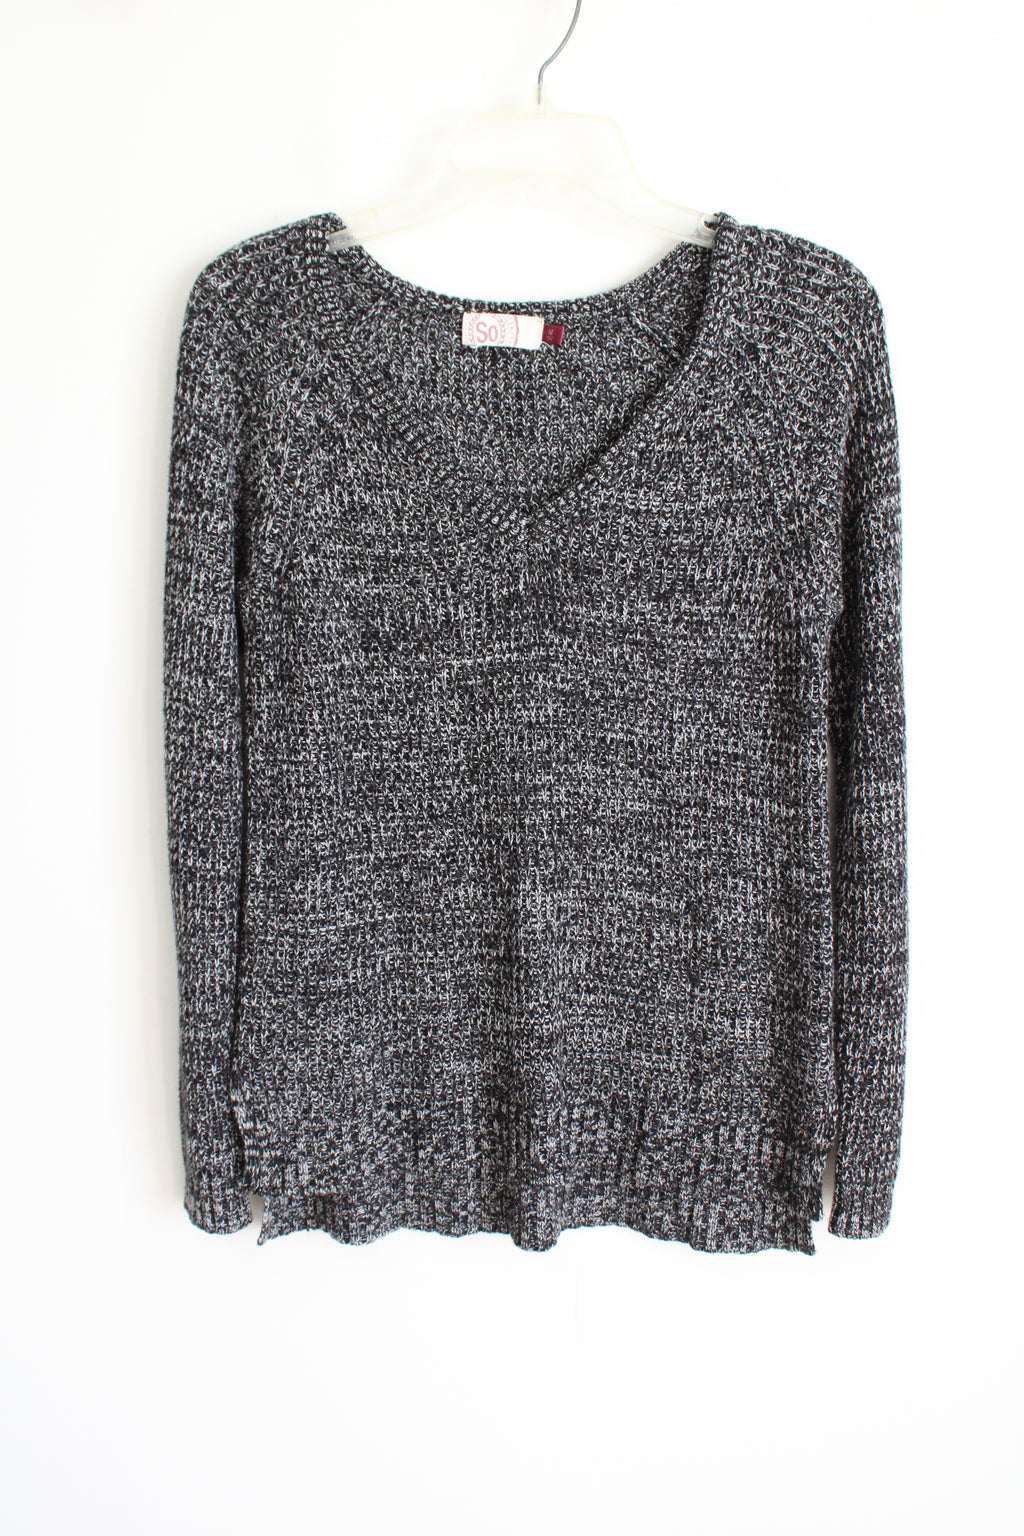 SO Black & White Knit Sweater | M